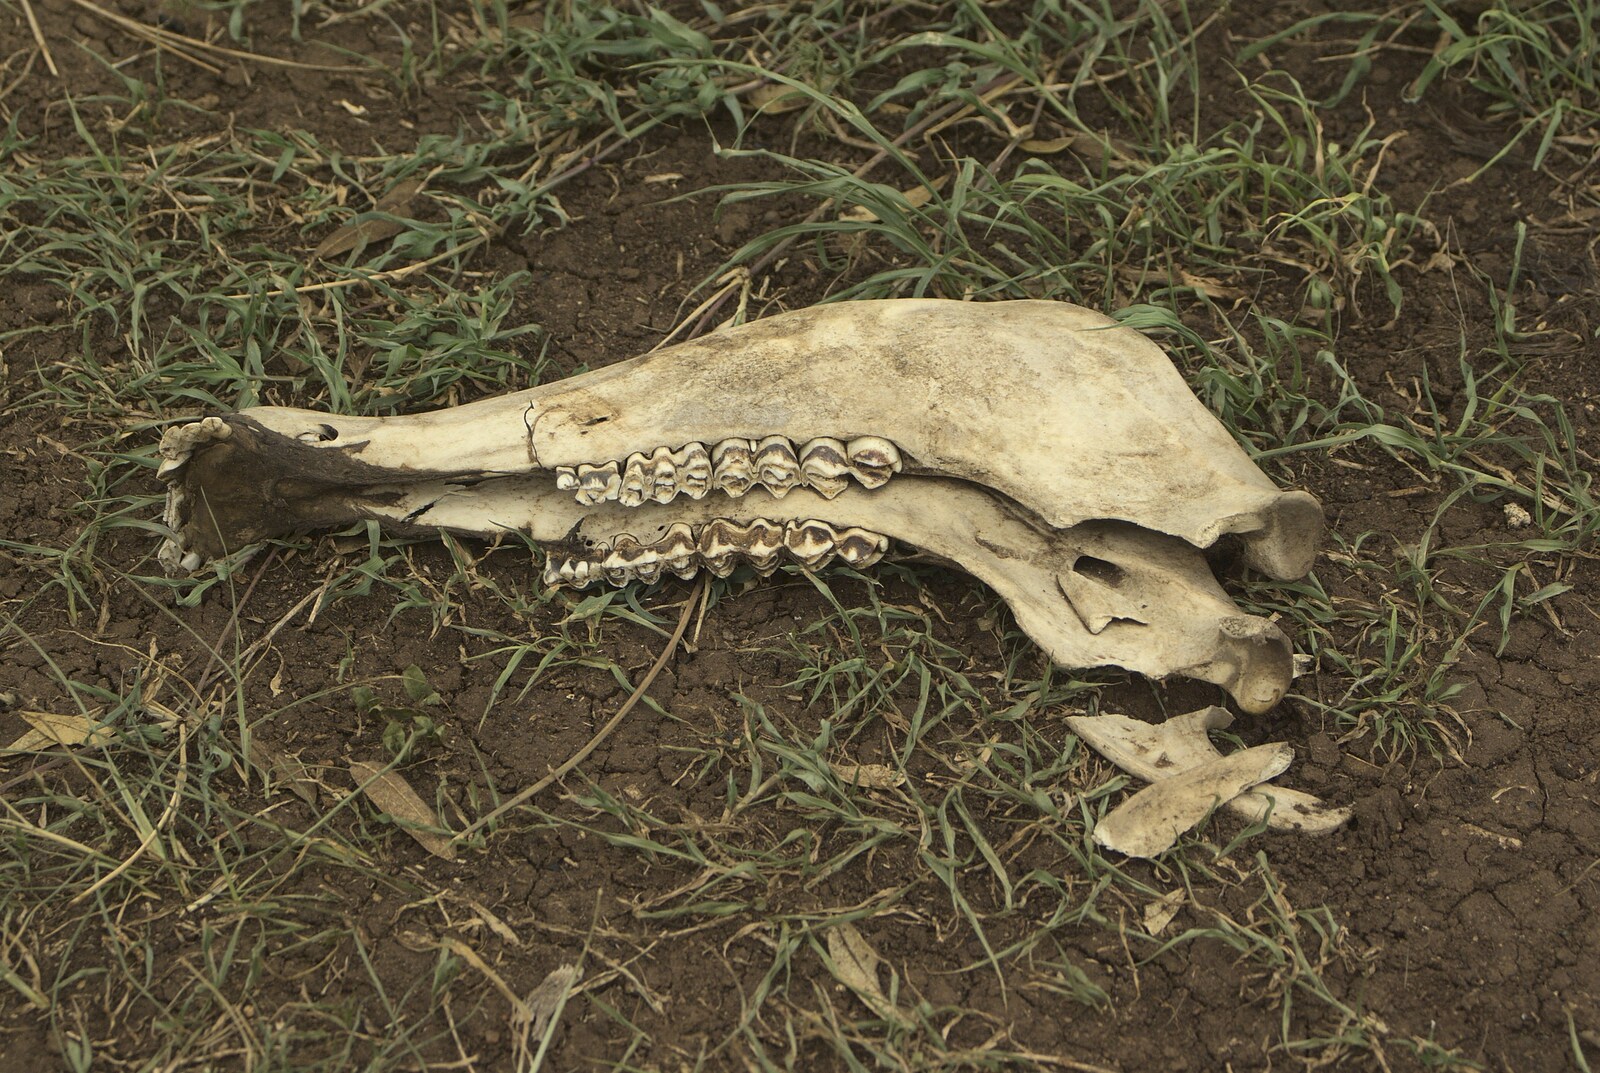 A ruminant's lower jaw bone from Maasai Mara Safari and a Maasai Village, Ololaimutia, Kenya - 5th November 2010